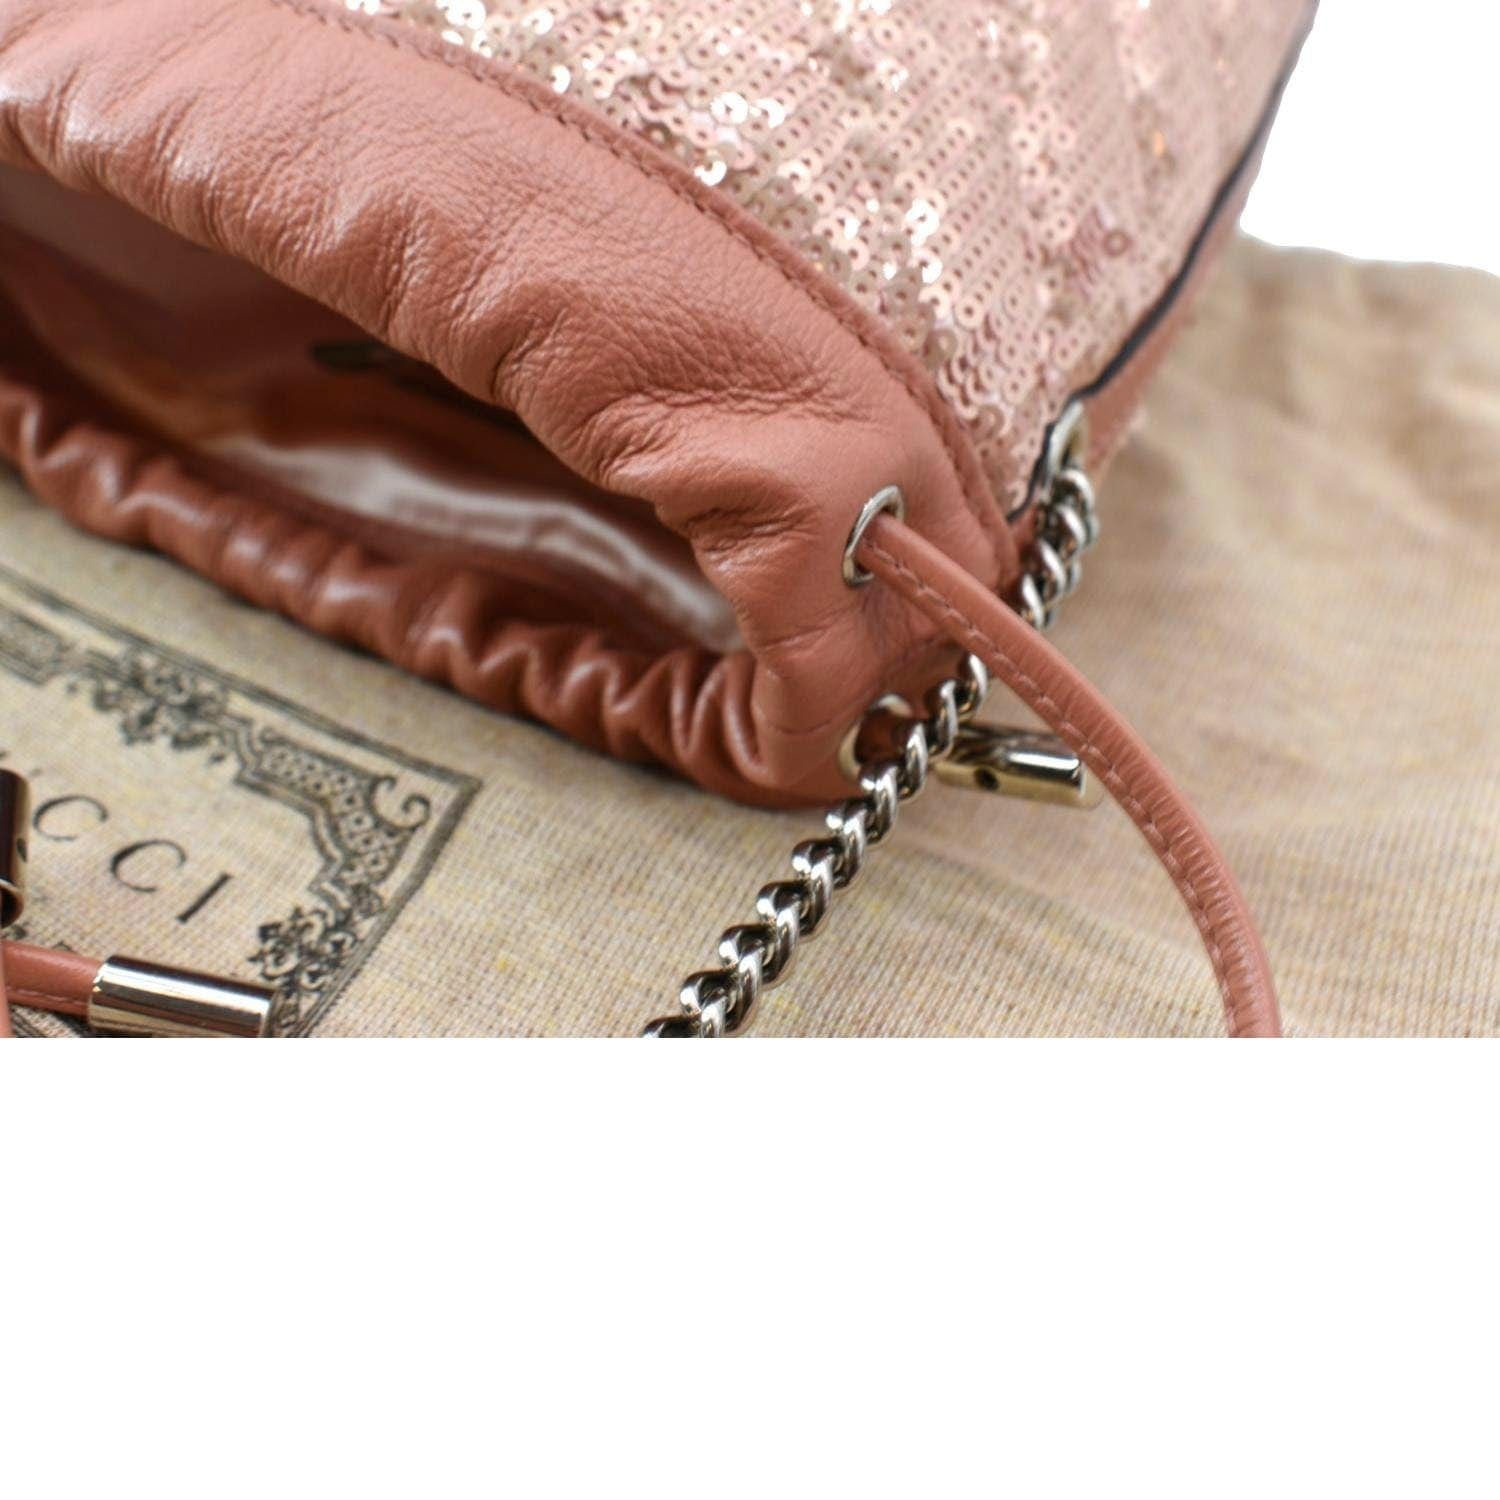 Gg marmont flap glitter crossbody bag Gucci Pink in Glitter - 31914575